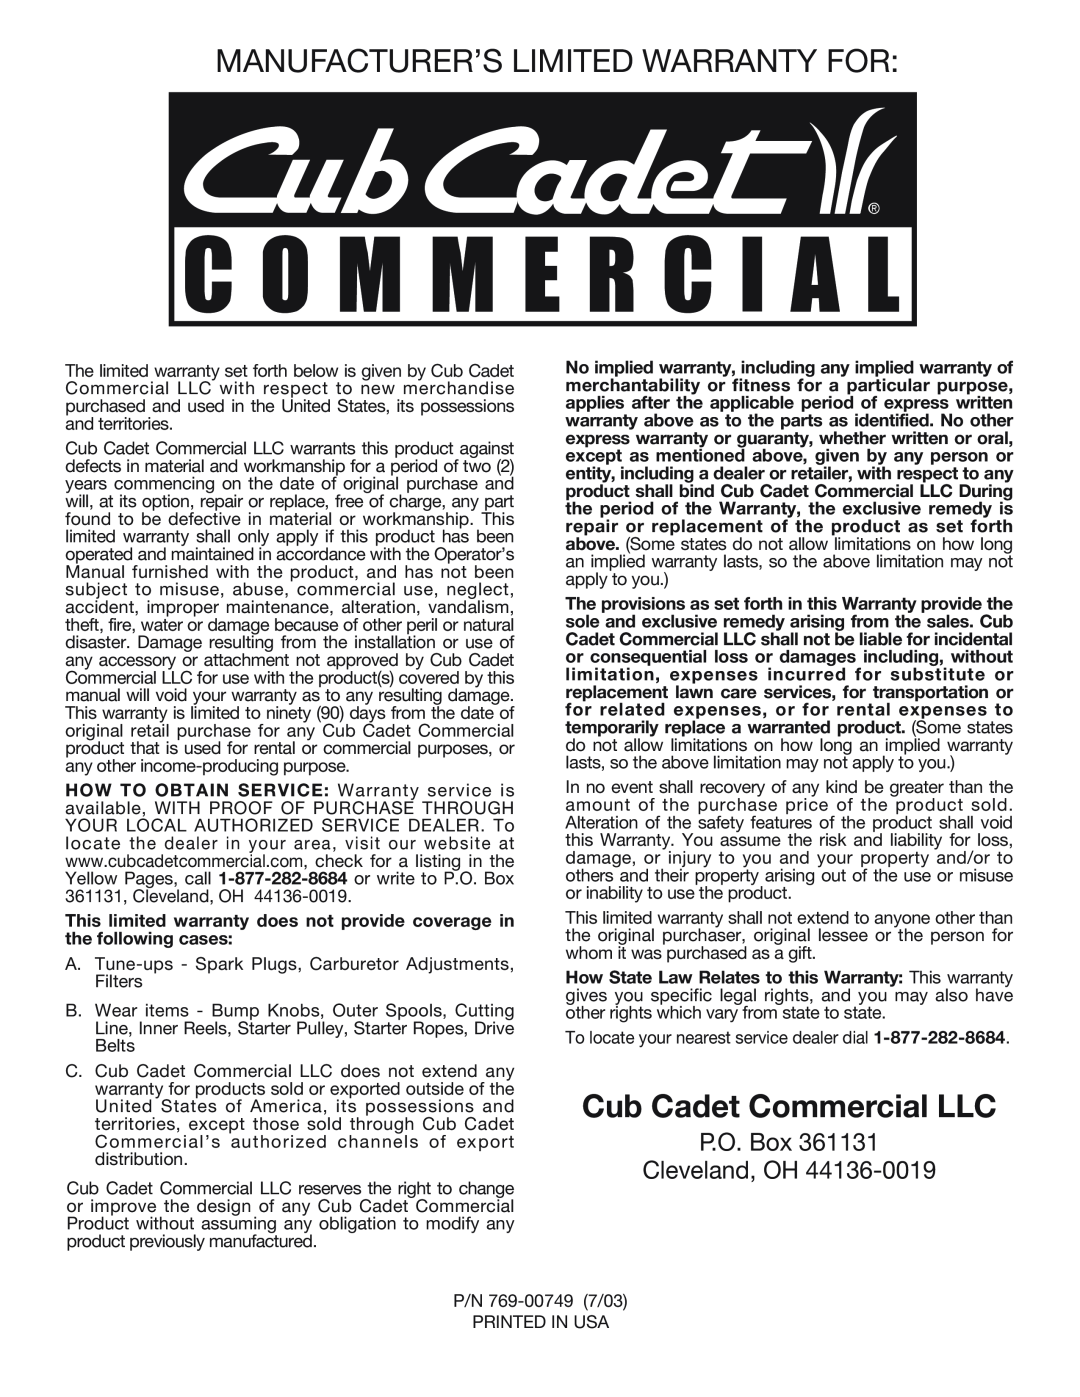 Cub Cadet CS5720 manual Cub Cadet Commercial LLC, Manufacturer’S Limited Warranty For, P.O. Box Cleveland, OH 